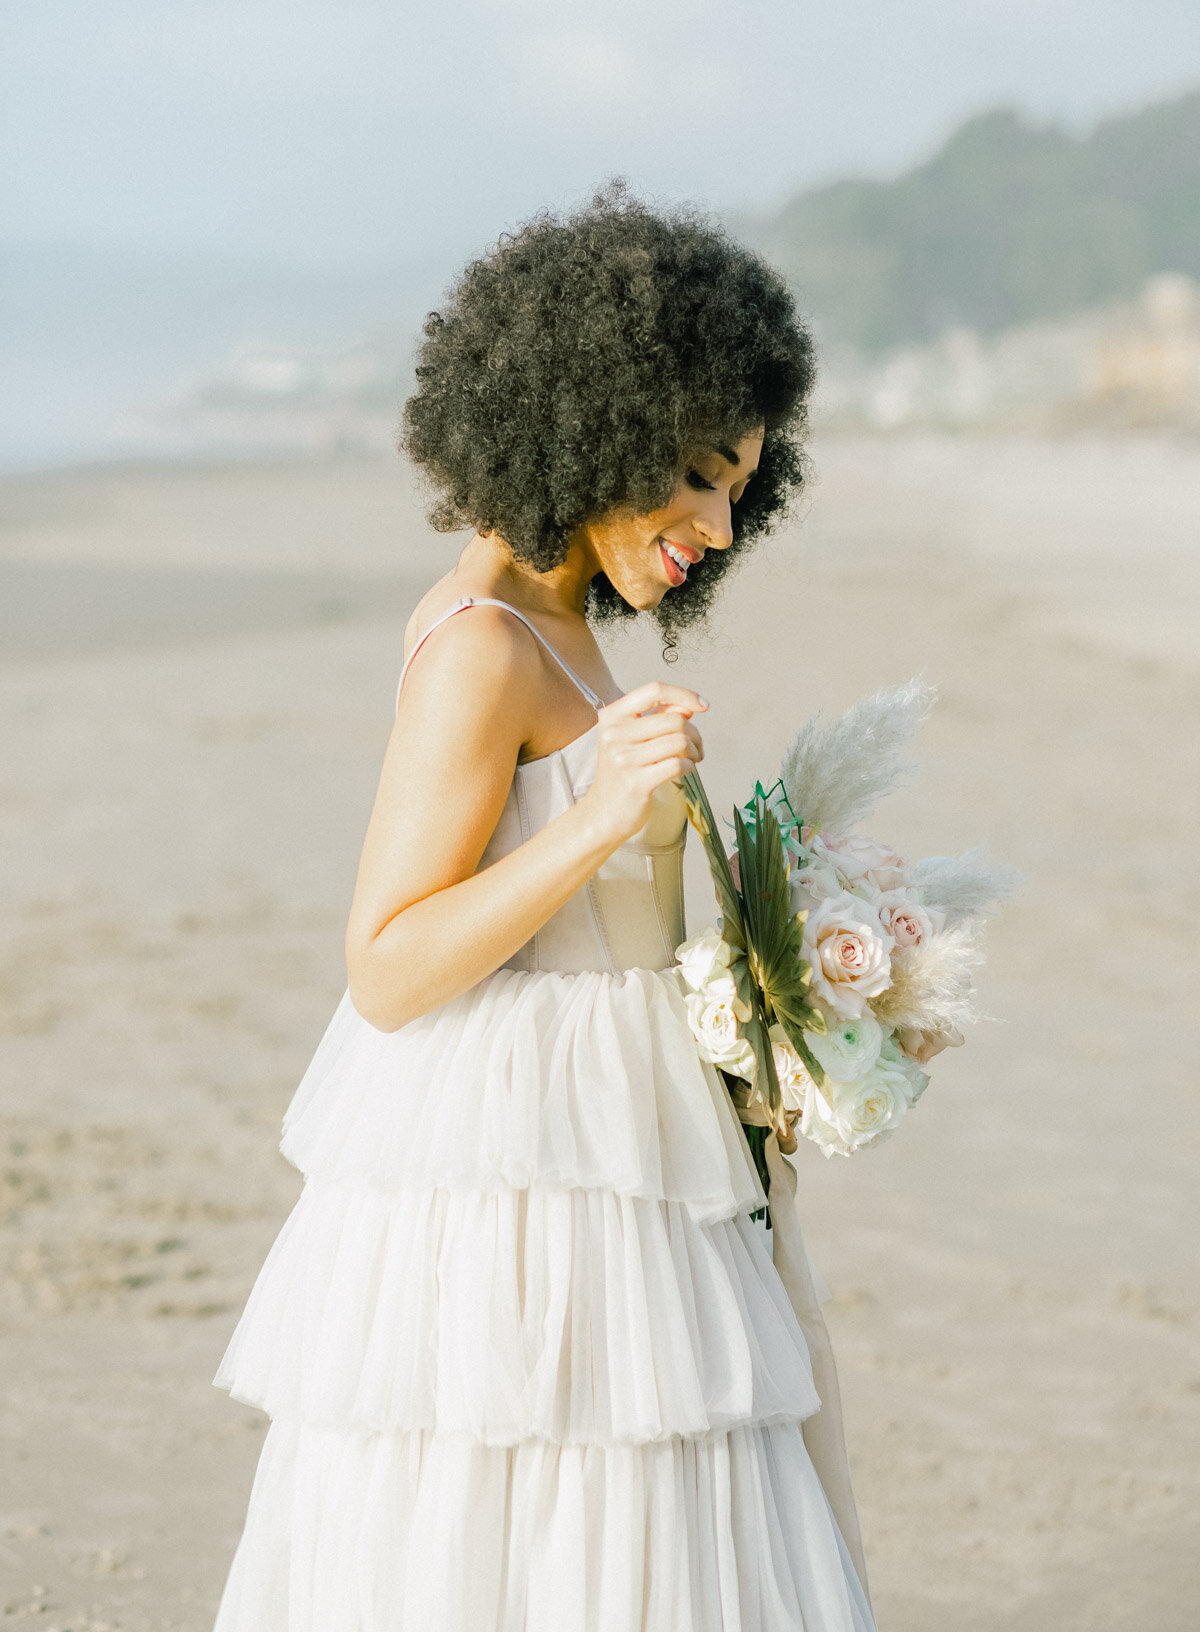 Cannon Beach Wedding and stylish bride